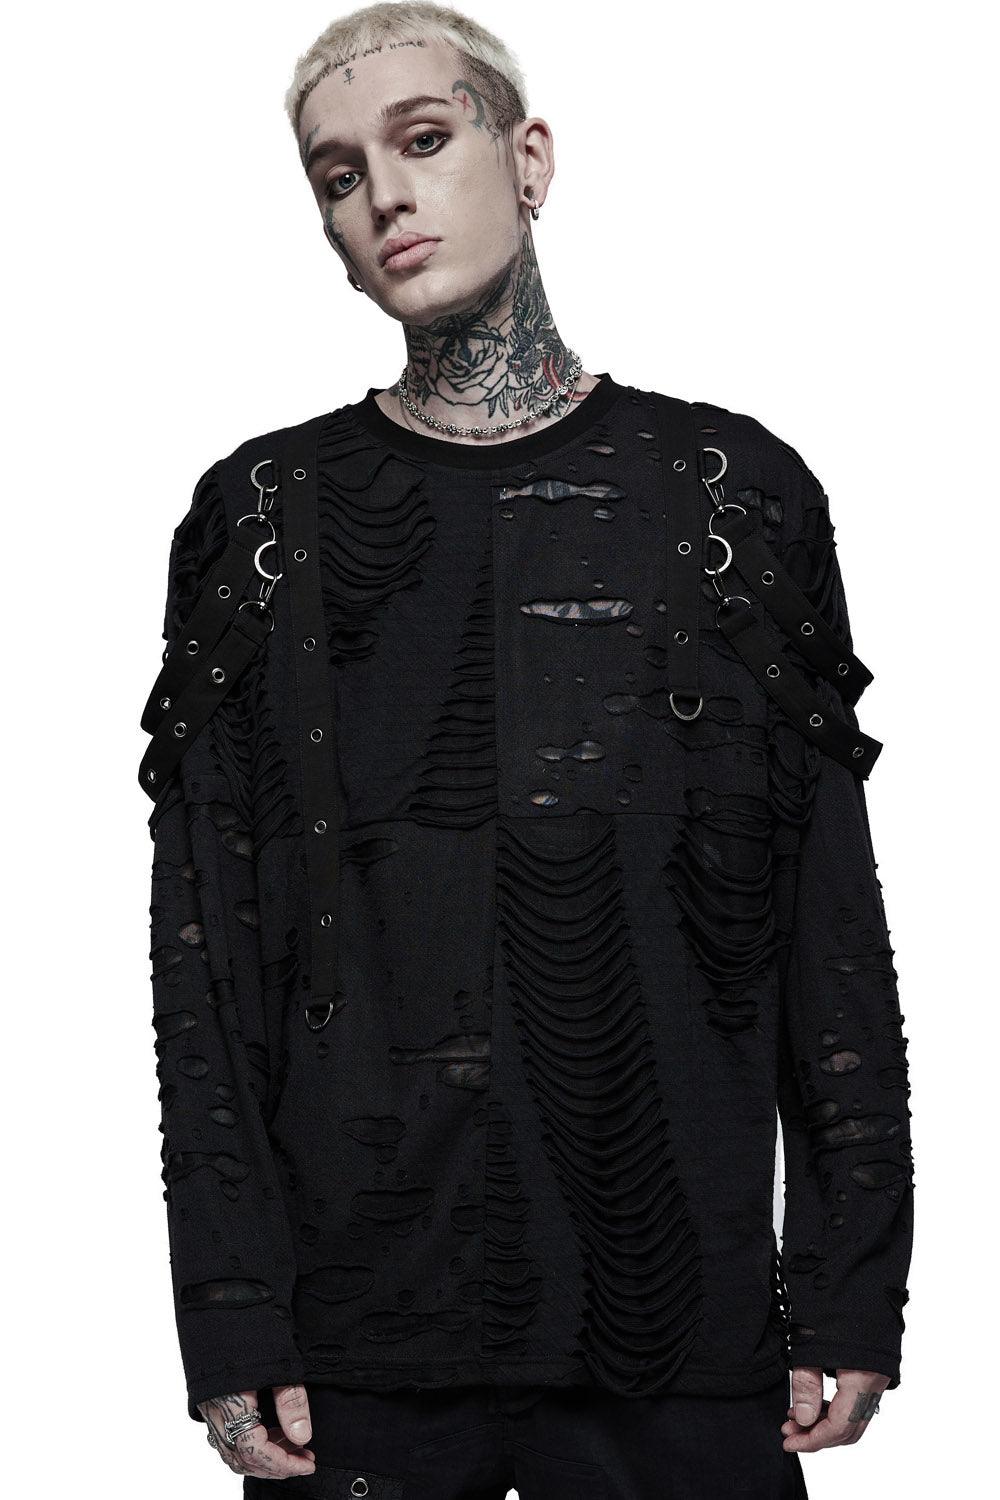 Punkrave: Gothic Fashion born from Punk Spirit